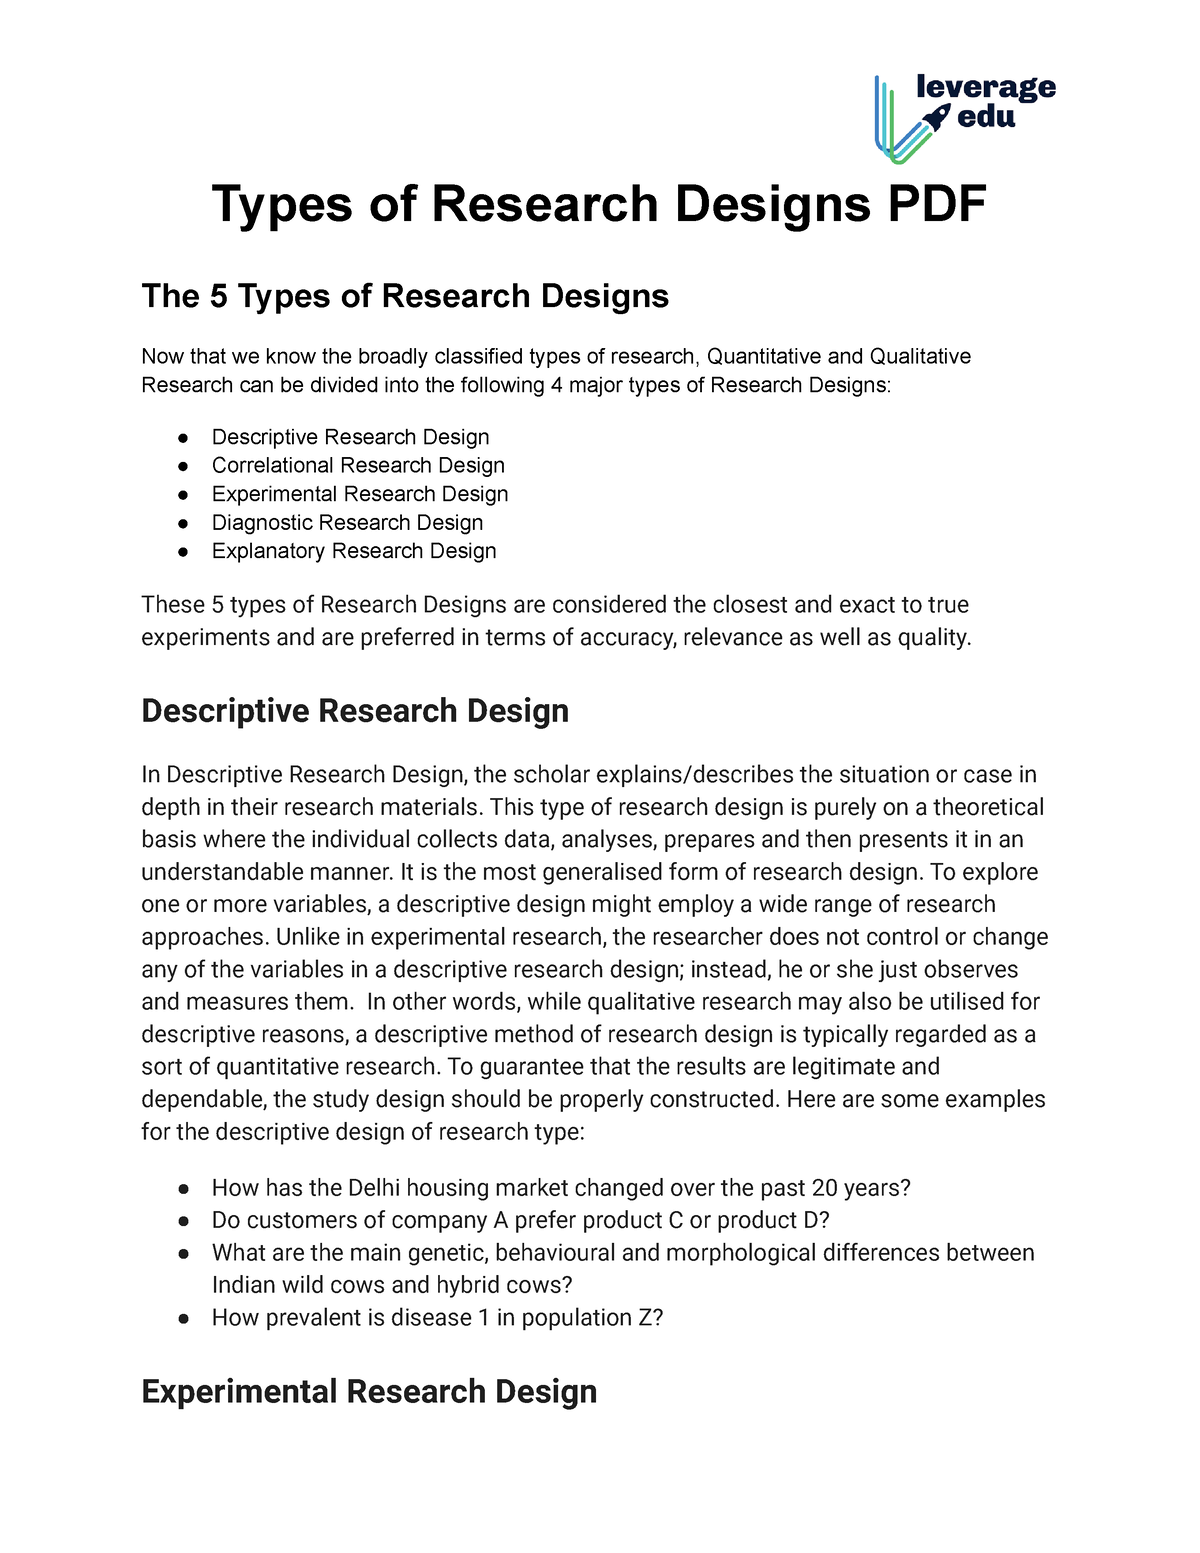 descriptive research design meaning pdf